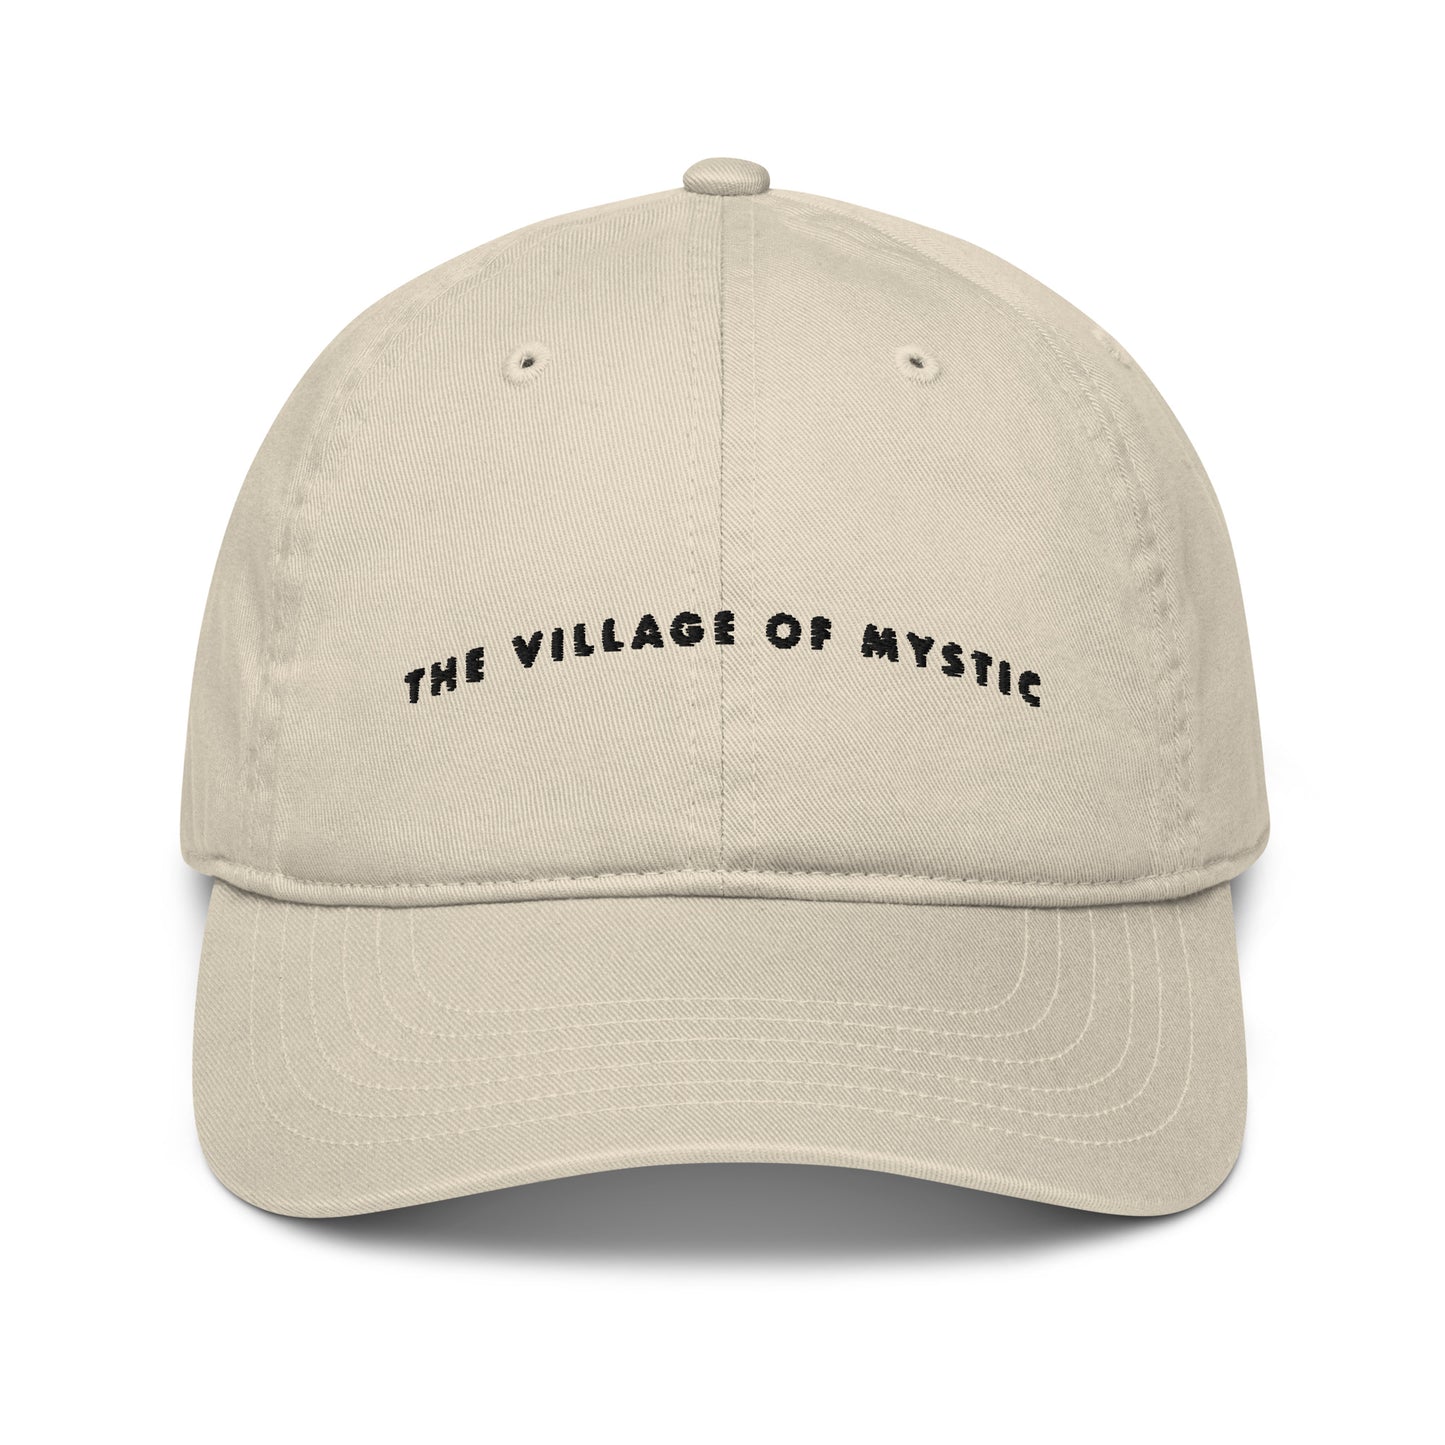 The Village of Mystic- Dad hat